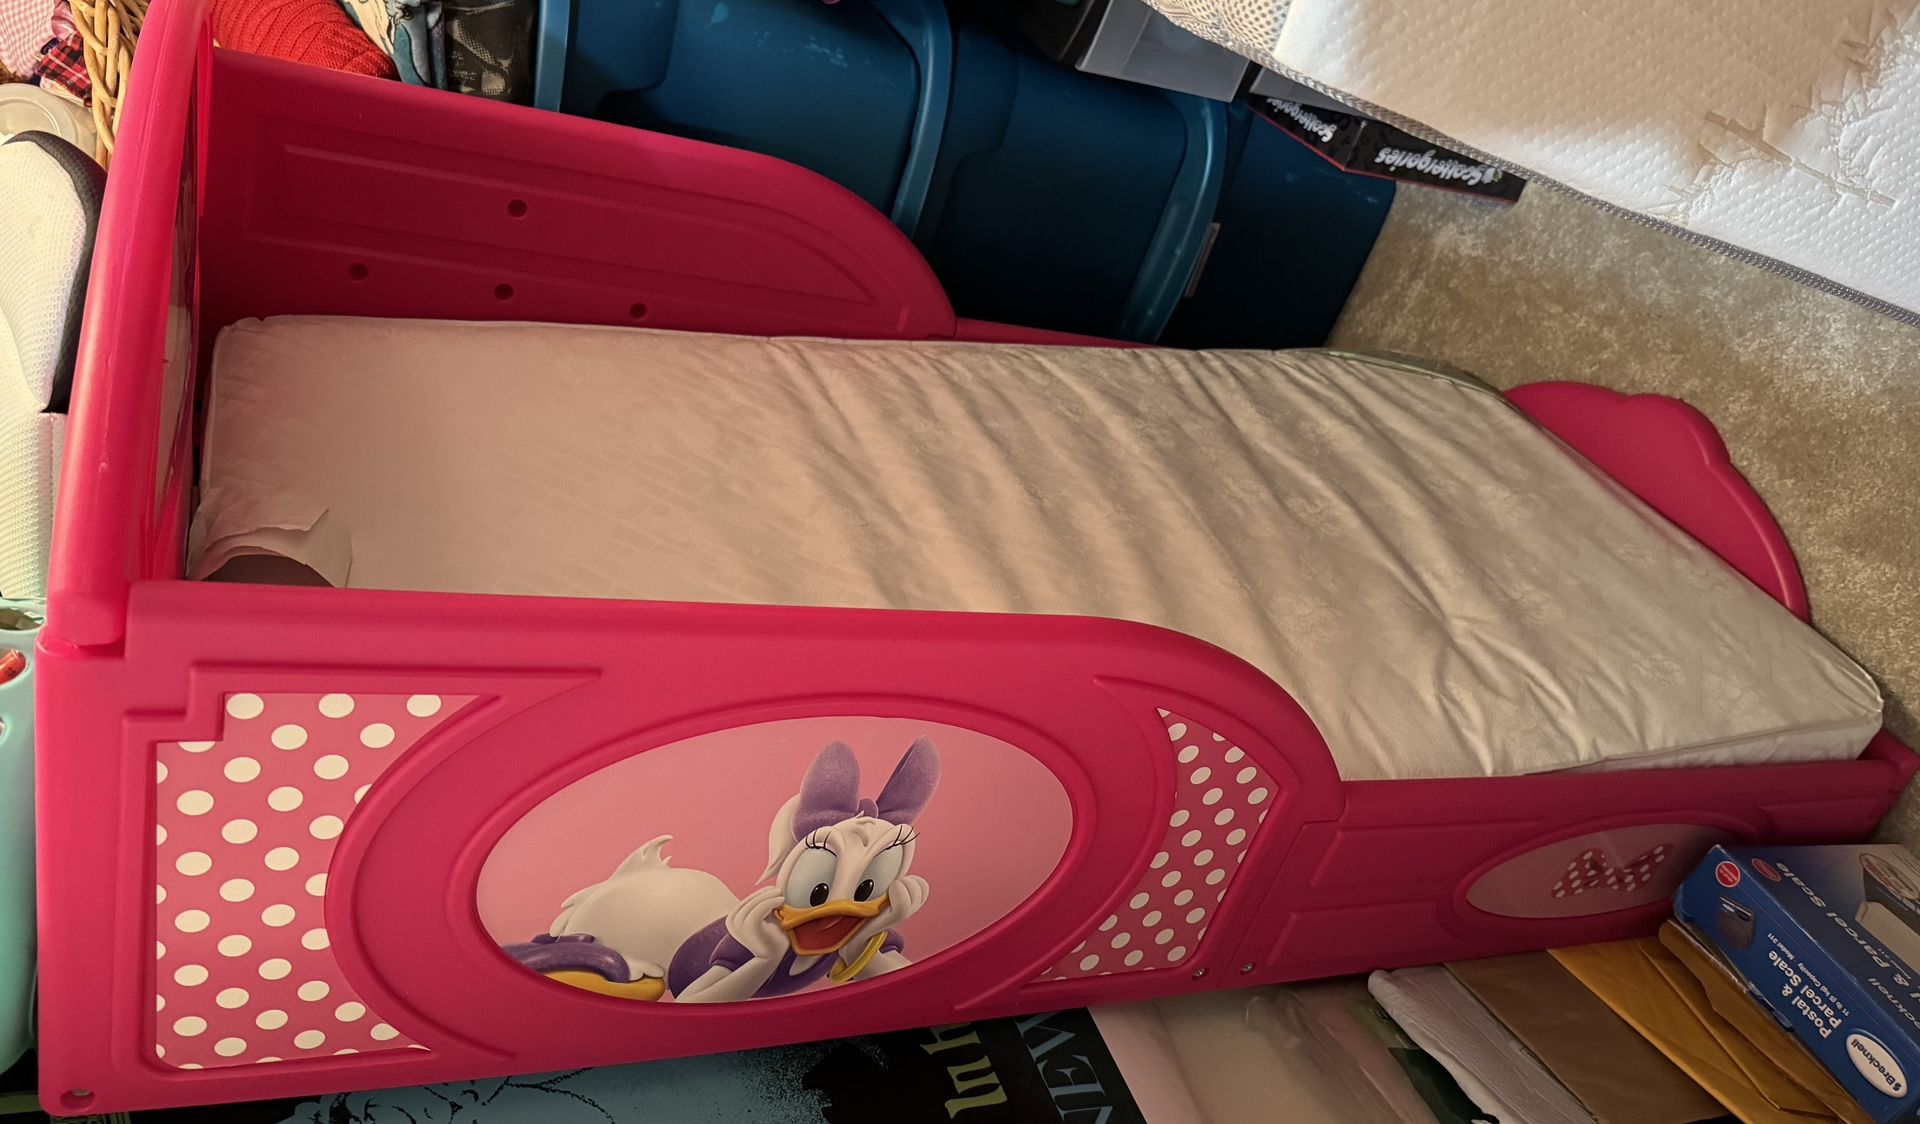 Disney child bed